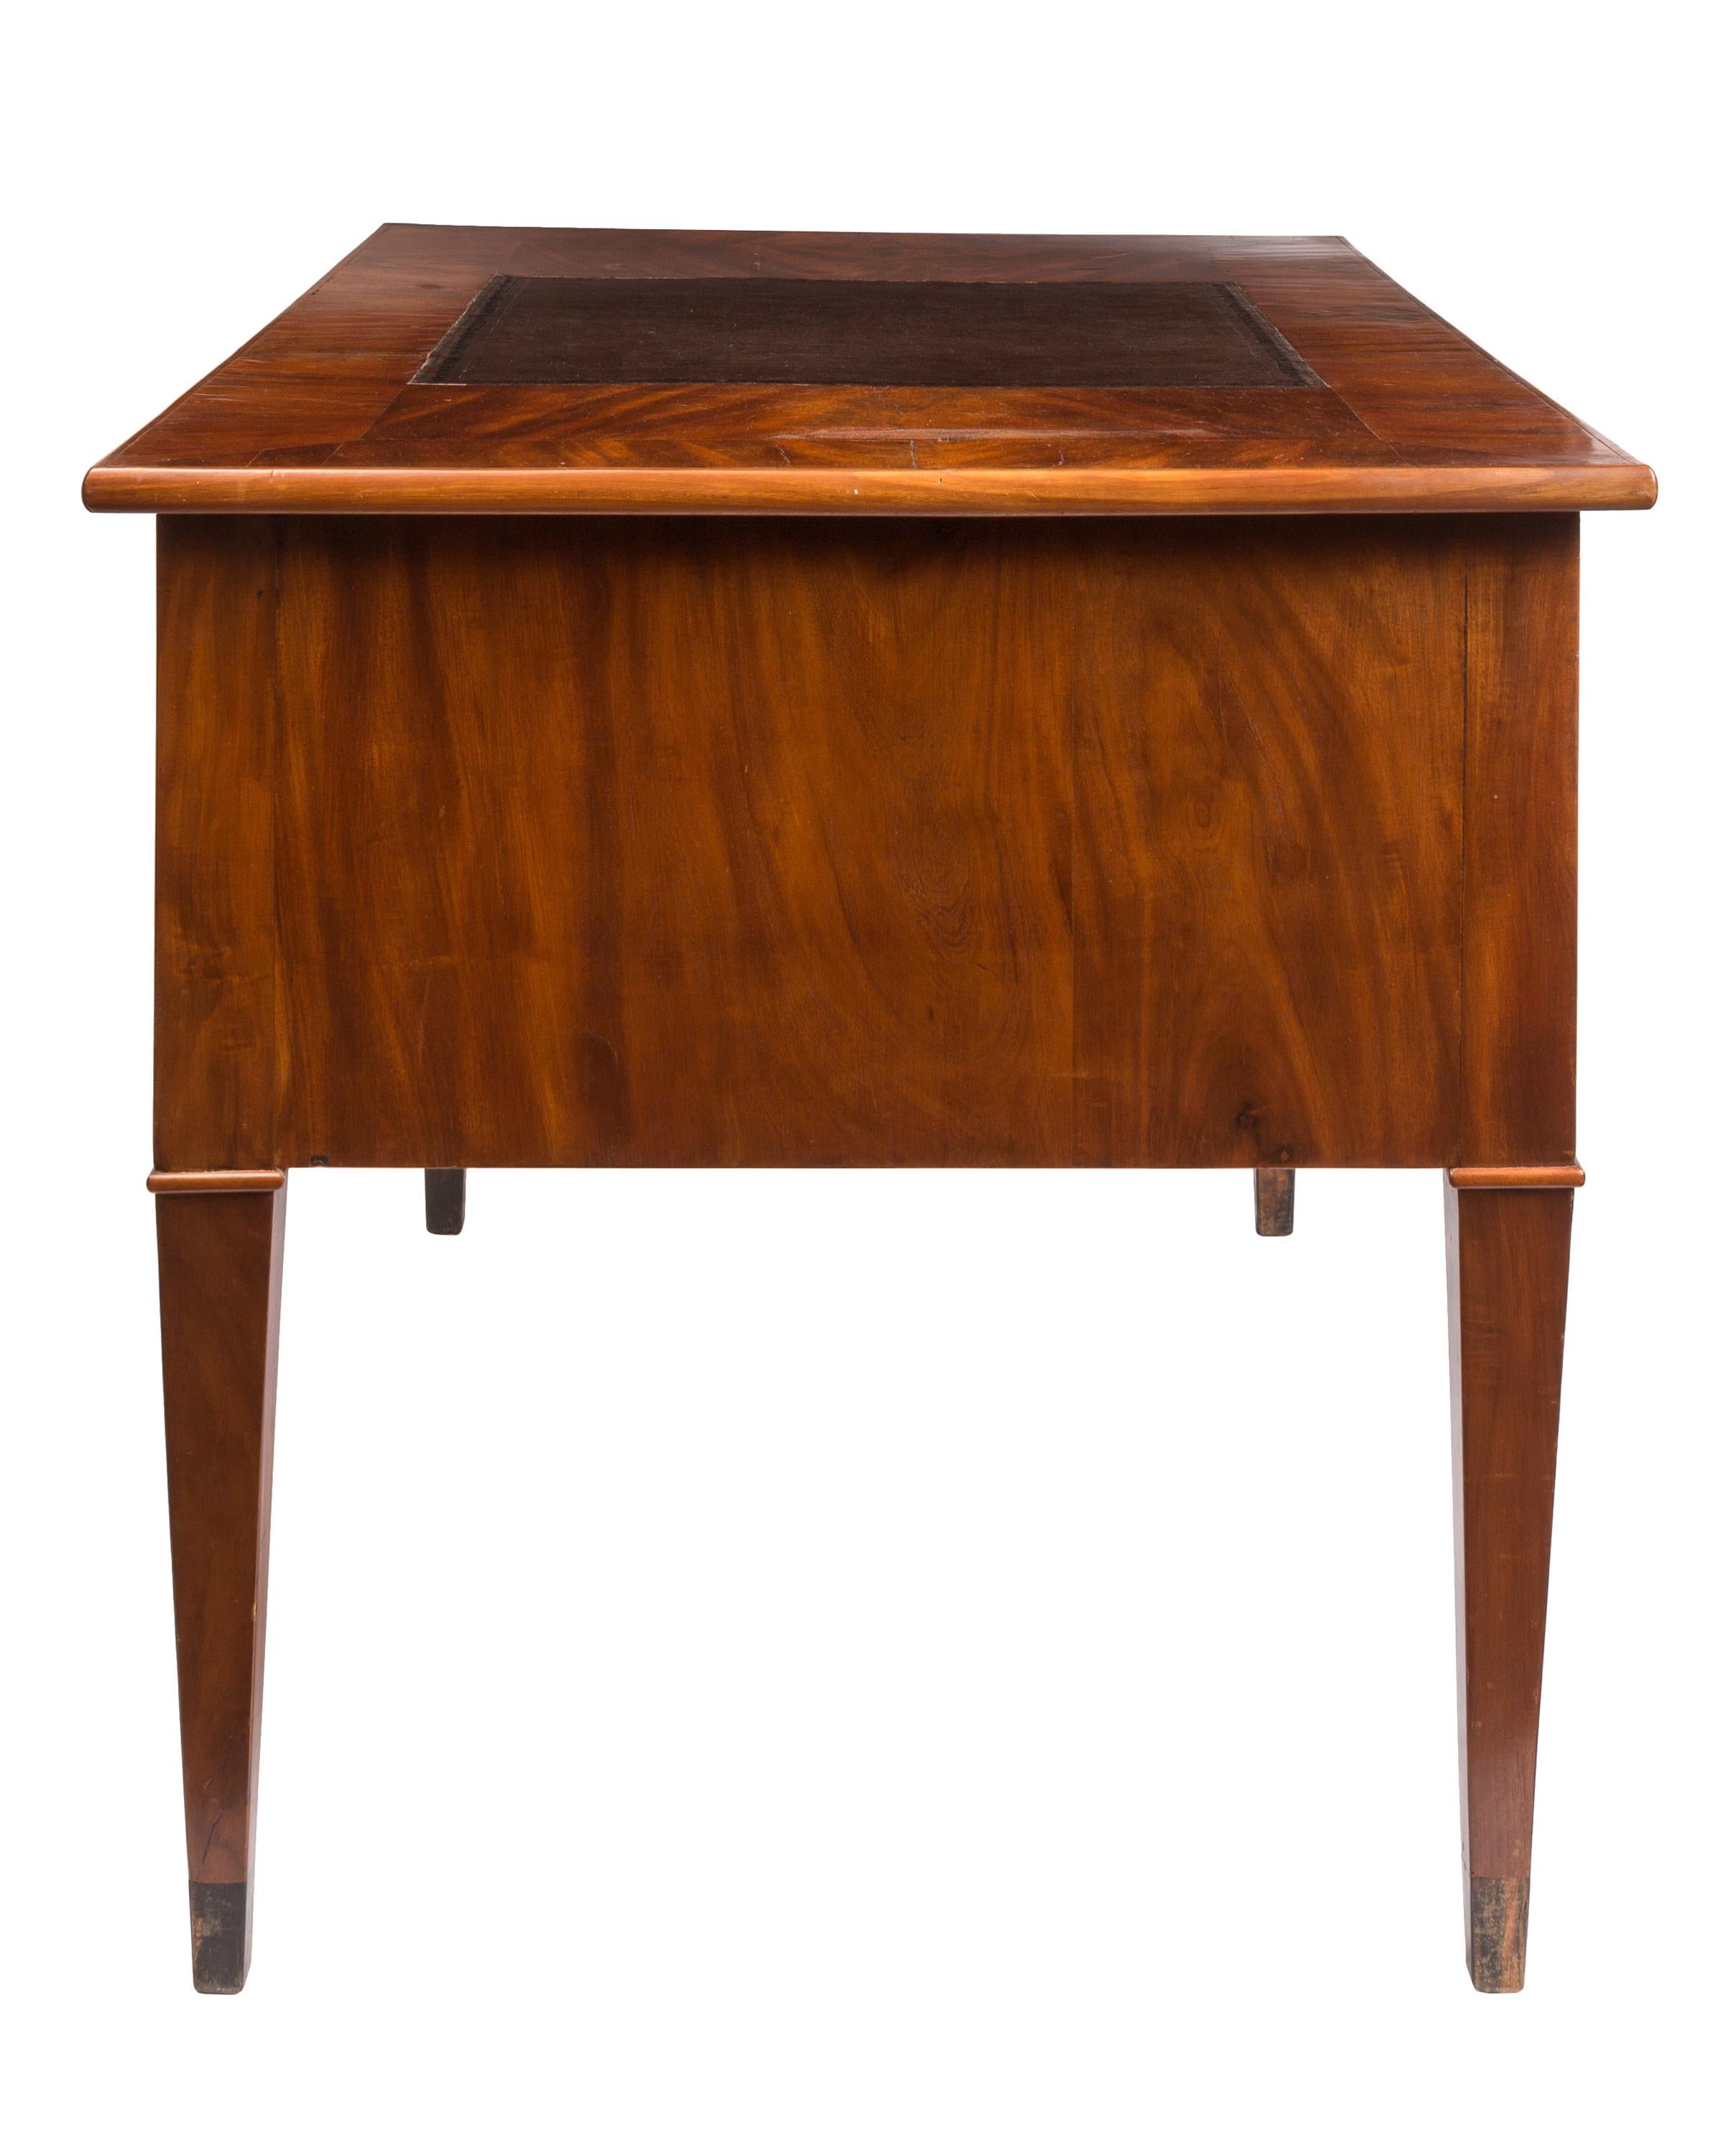 Regency 19th Century English Writing Desk, Partner Style, Leather Top, Wood Grain Veneer For Sale